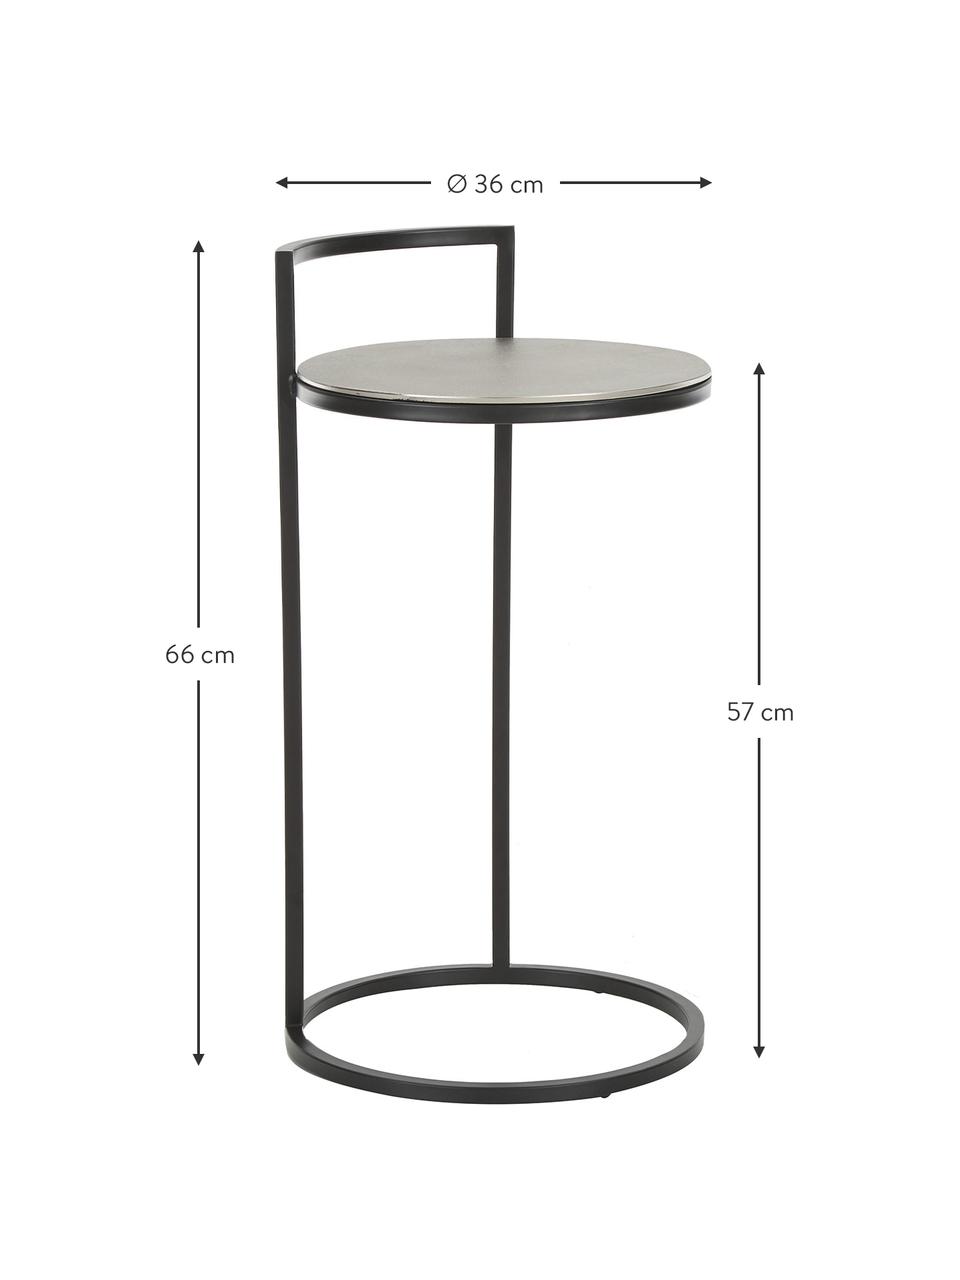 Mesa auxiliar redonda de metal Circle, Tablero: metal con pintura en polv, Estructura: metal con pintura en polv, Plateado, Ø 36 x Alto 66 cm